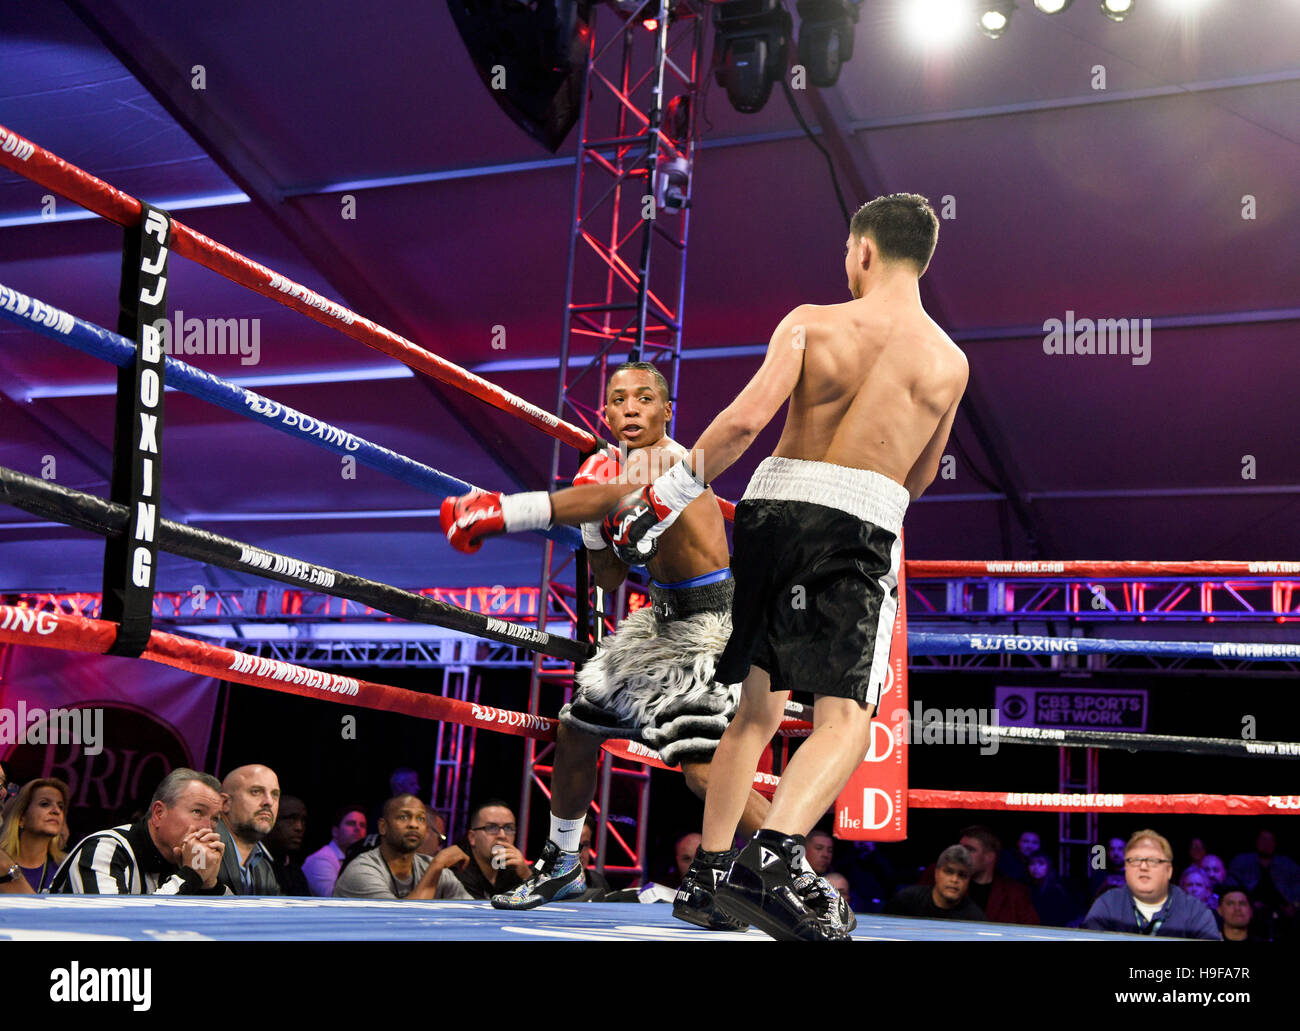 Las Vegas, Nevada November 18, 2016 - Jaun 'Ciclon Junior' Sanchez vs Javier 'Lights Out' Cepeda at  “Knockout Night at the D” Stock Photo